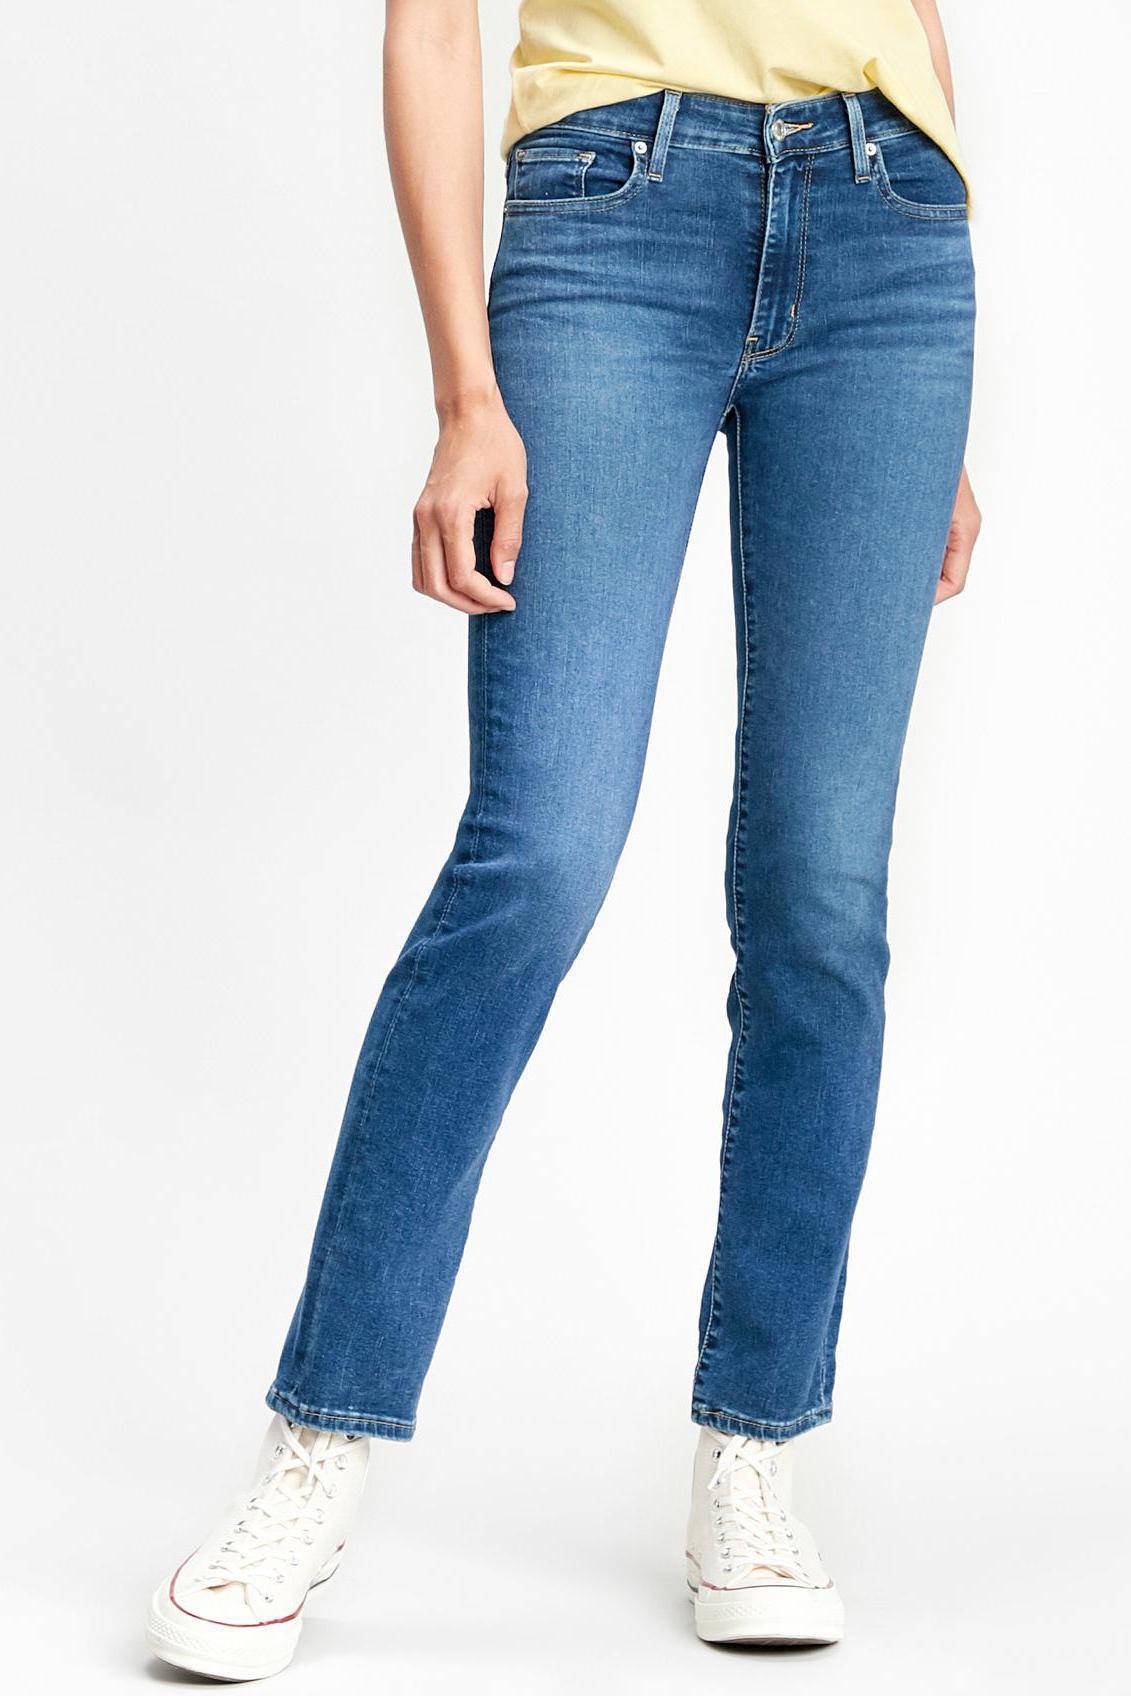 Levi's 712 high waist slim fit jeans 